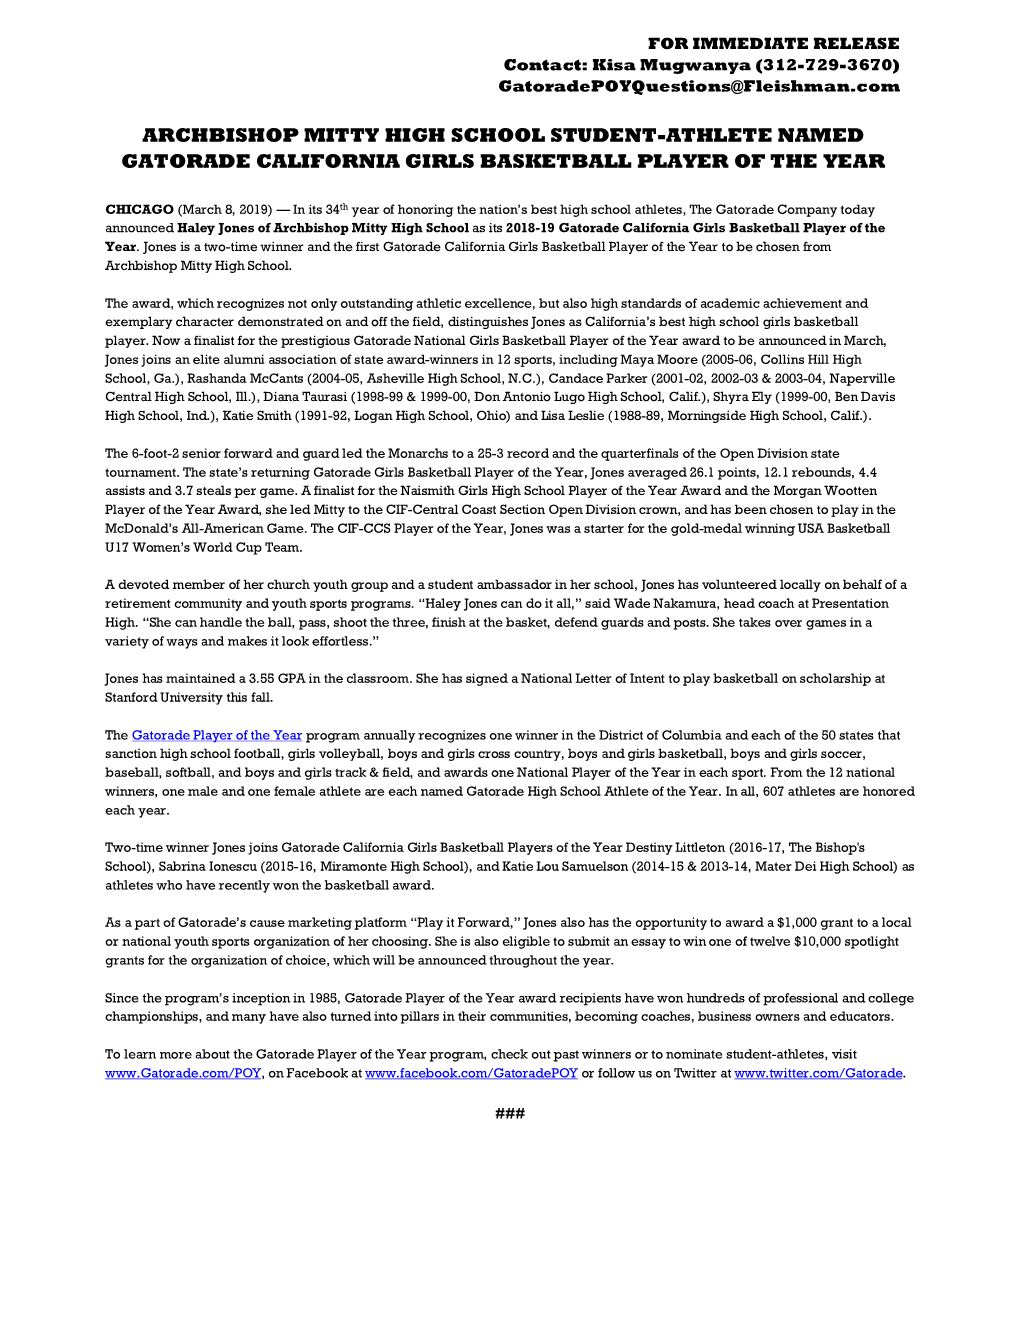 Archbishop Mitty High School Student-Athlete Named Gatorade California Girls Basketball Player of the Year